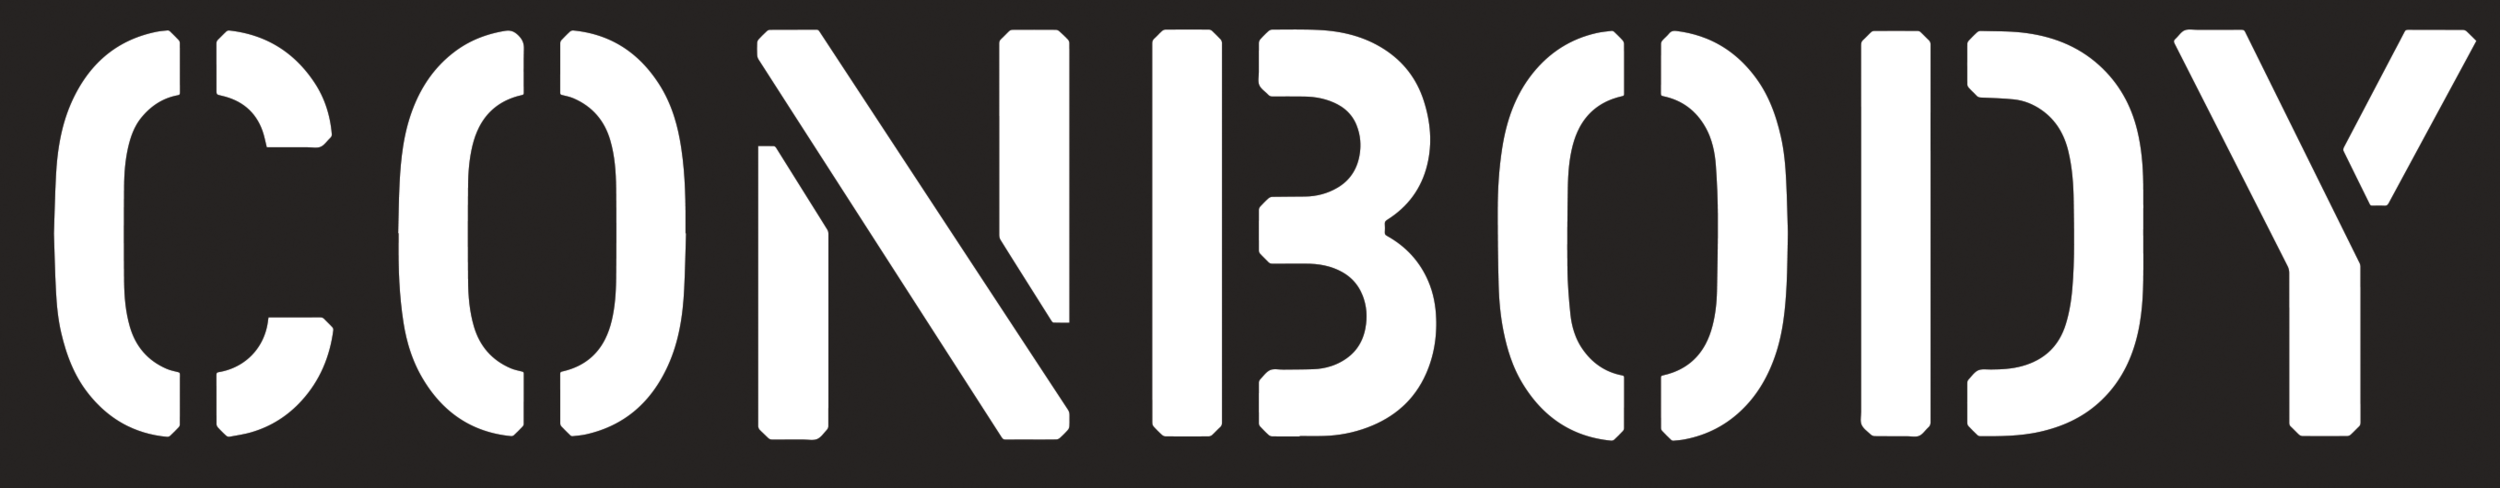 CB Logo 1.png